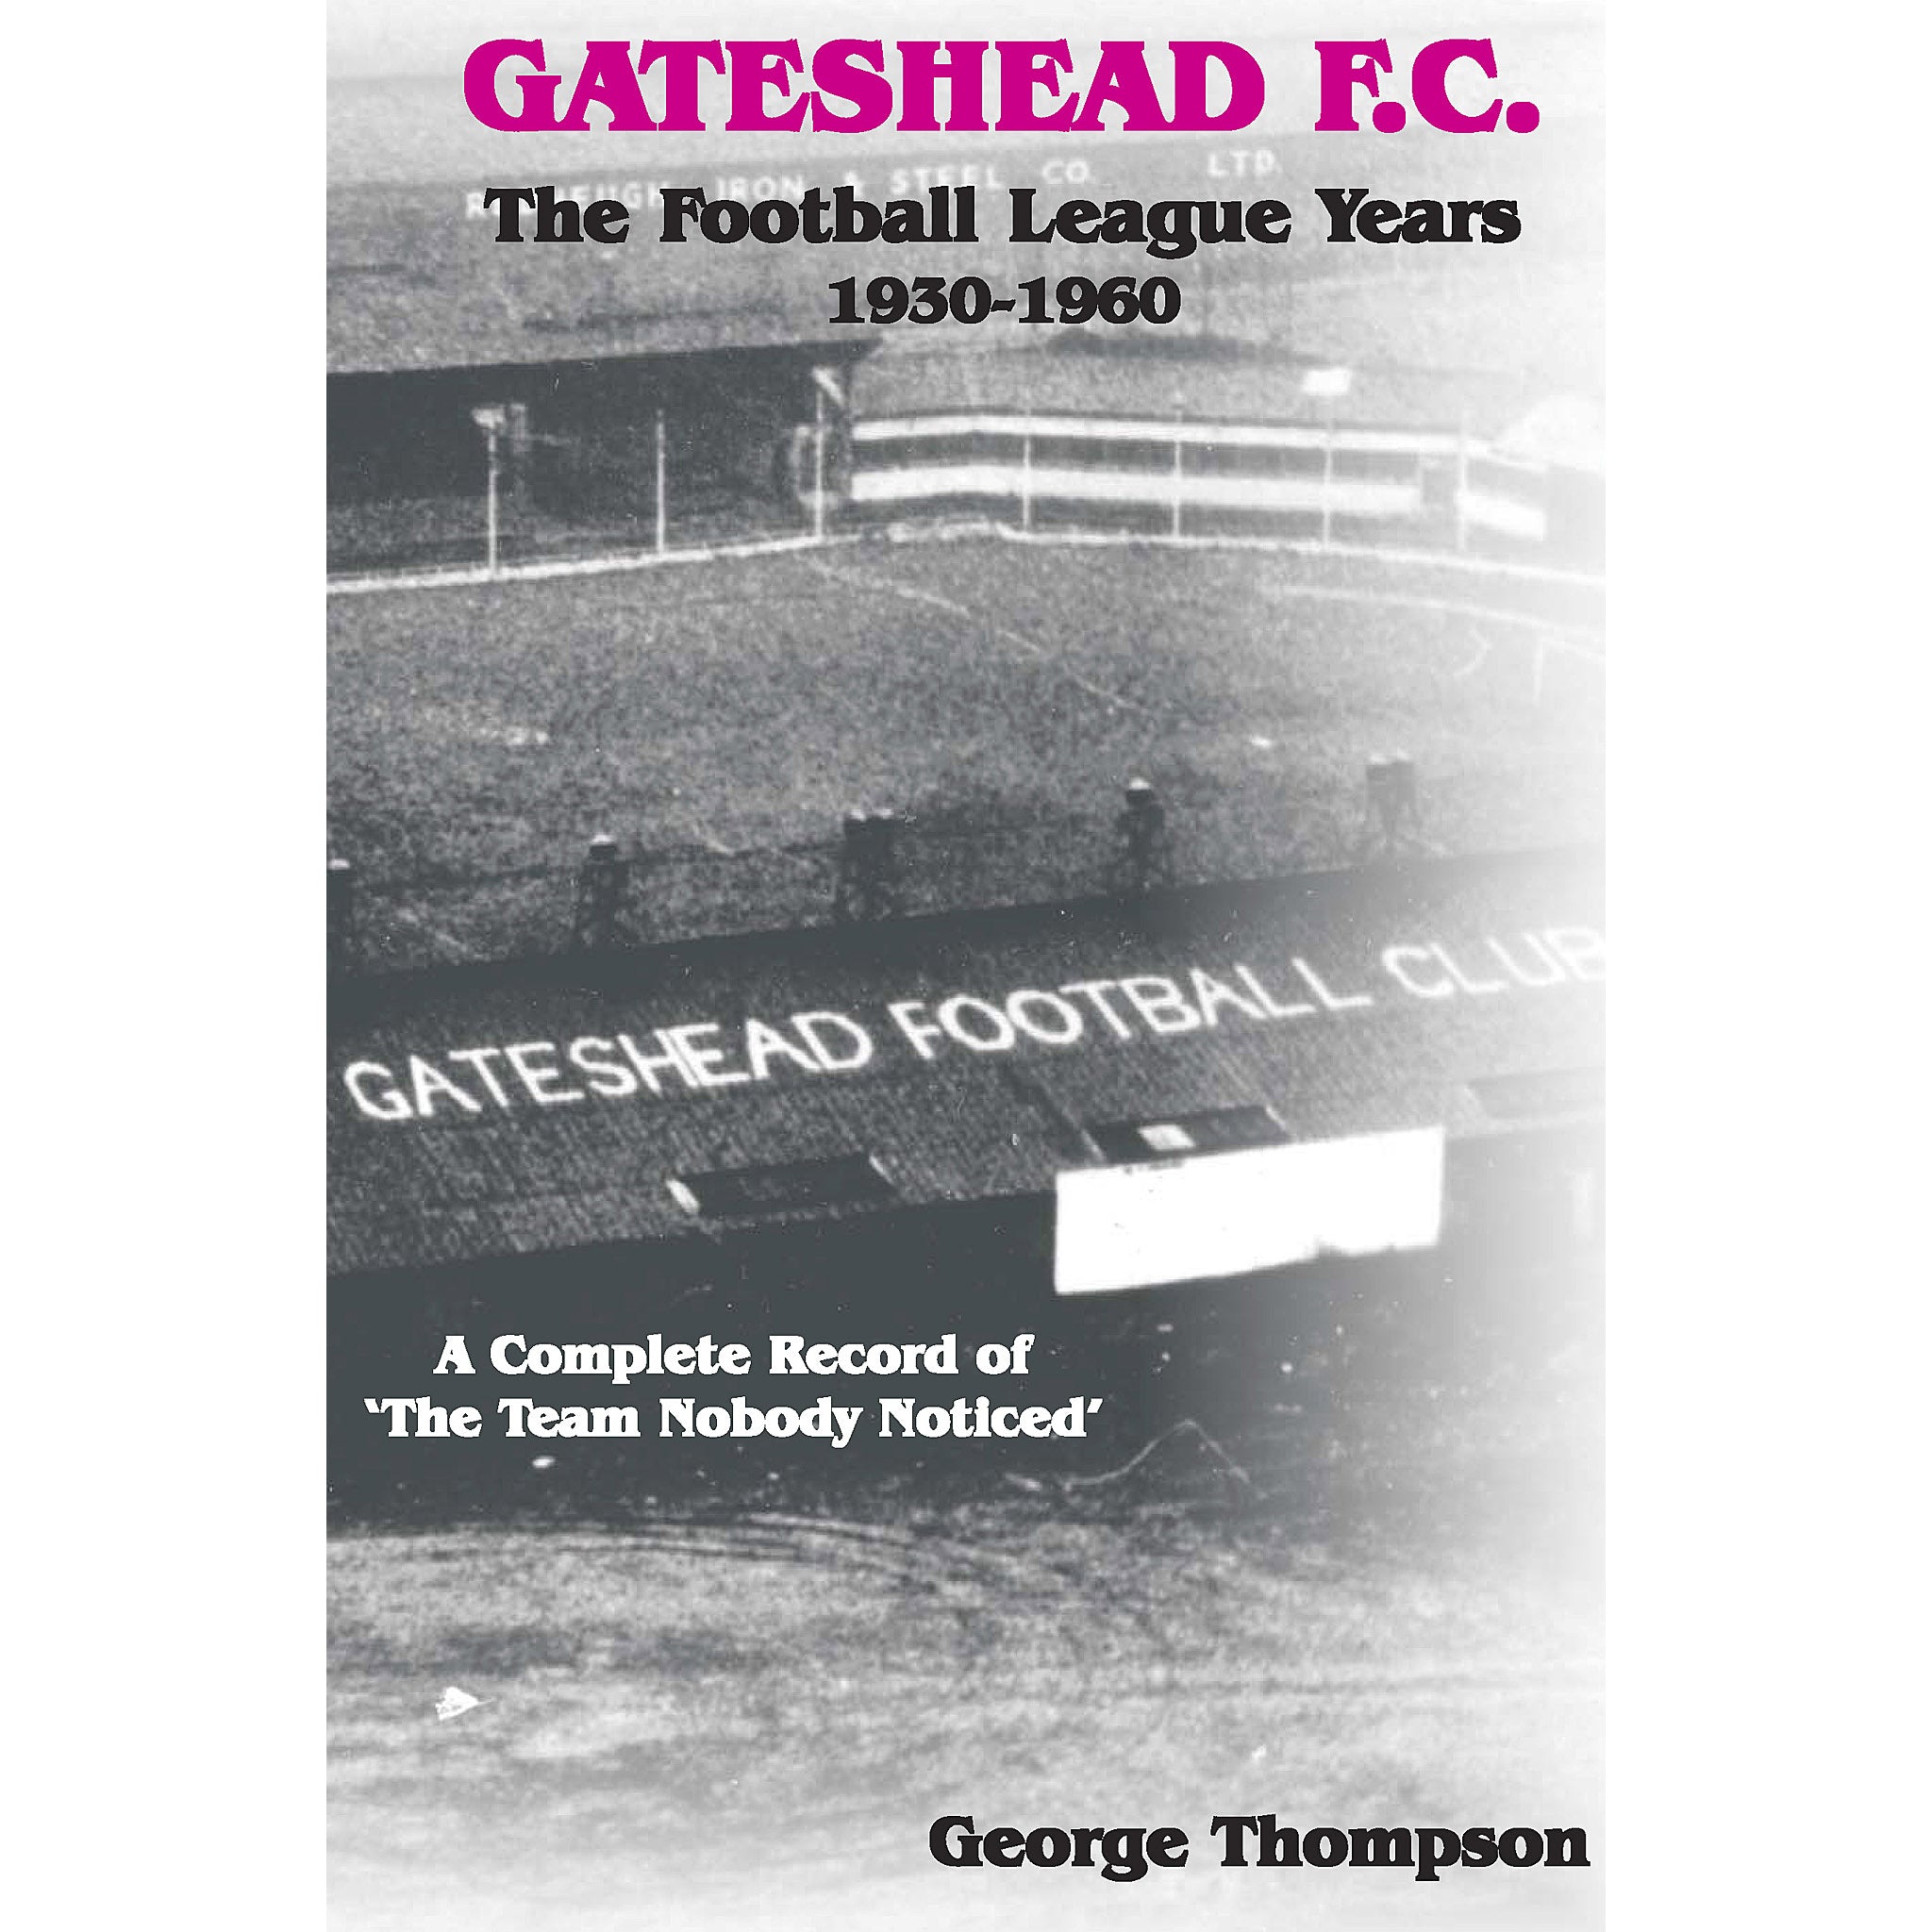 Gateshead F.C. – The Football League Years 1930-1960